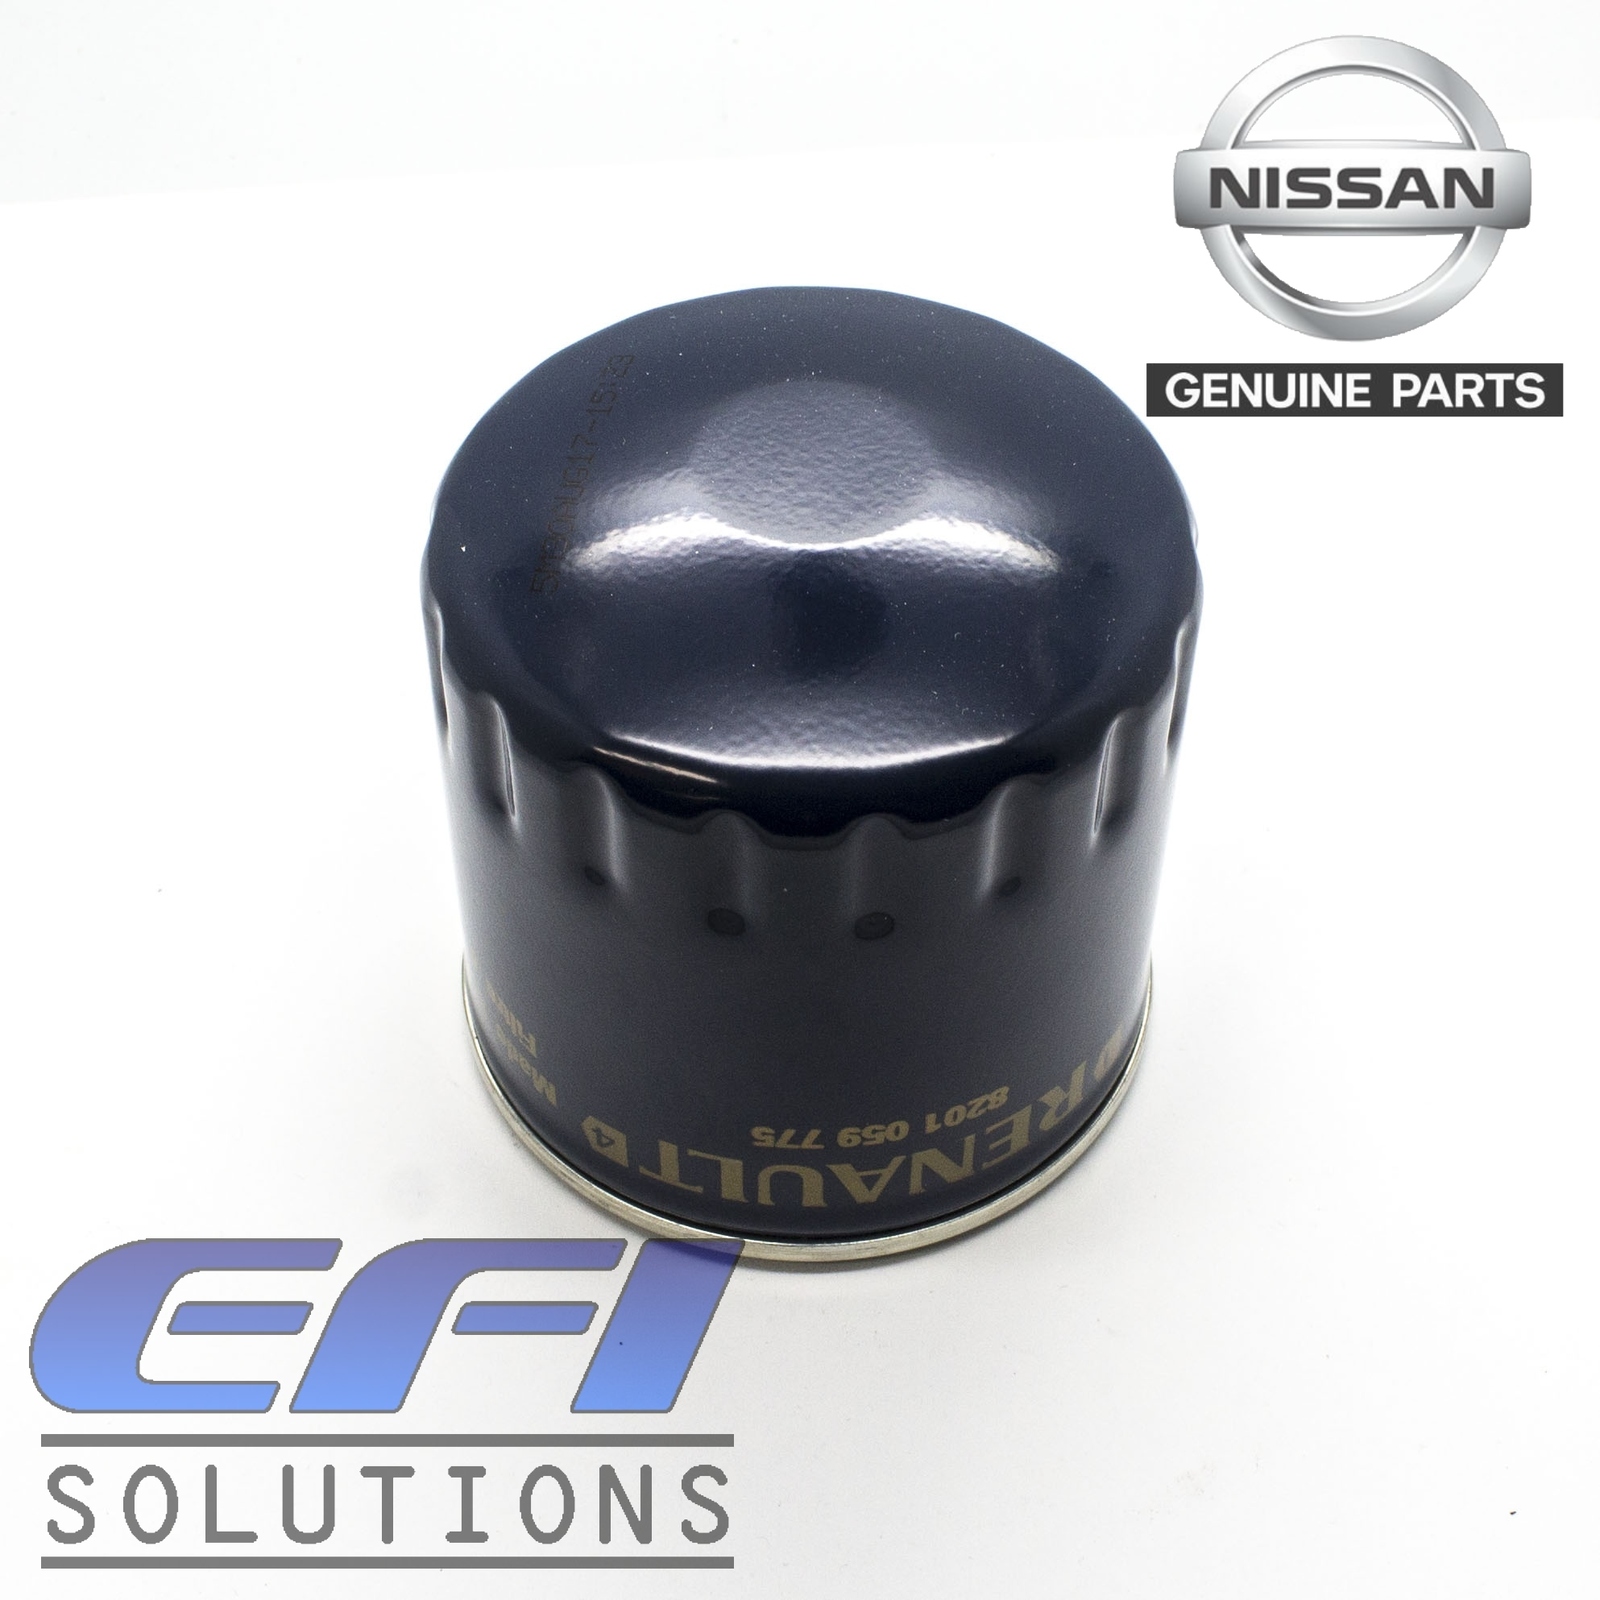 Genuine Nissan Oil Filter (V9X Diesel) "D40, R51" Navara Pathfinder